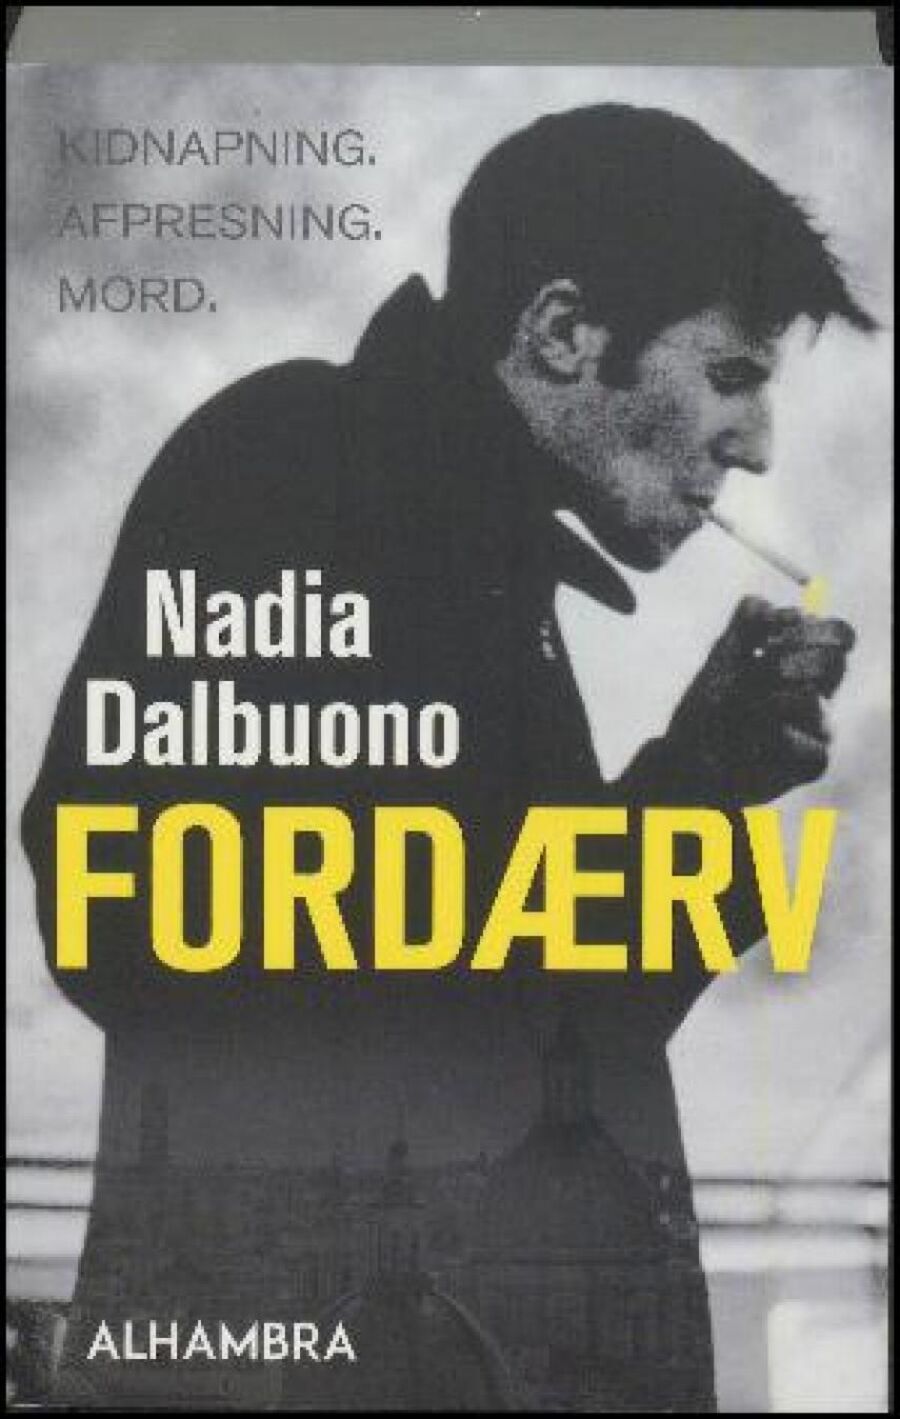 Forsidebillede til kriminalromanen Fordærv